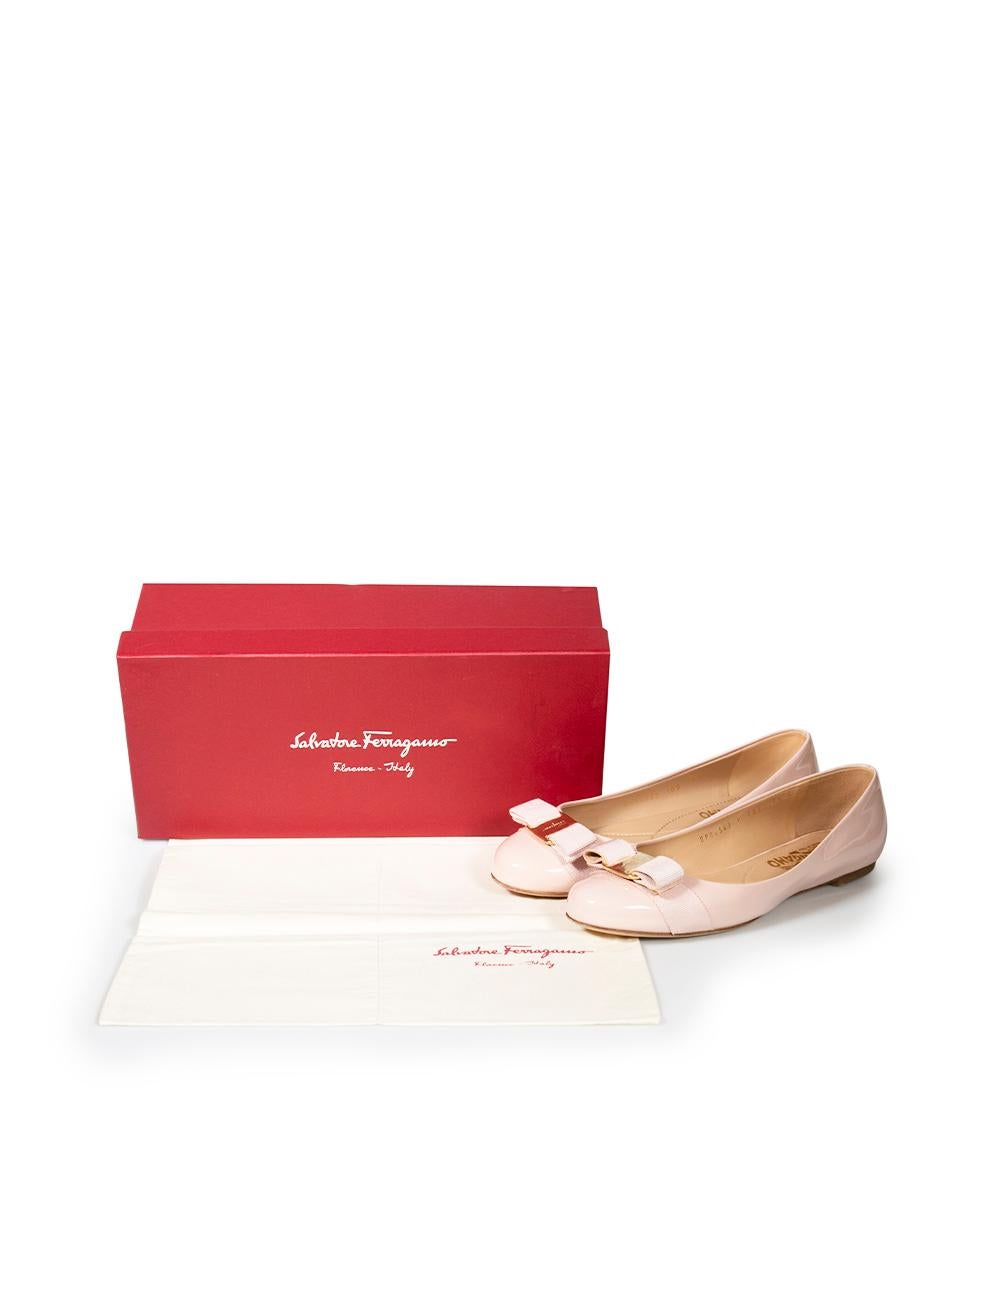 Salvatore Ferragamo Pink Patent Varina Ballet Flats Size US 7.5 4